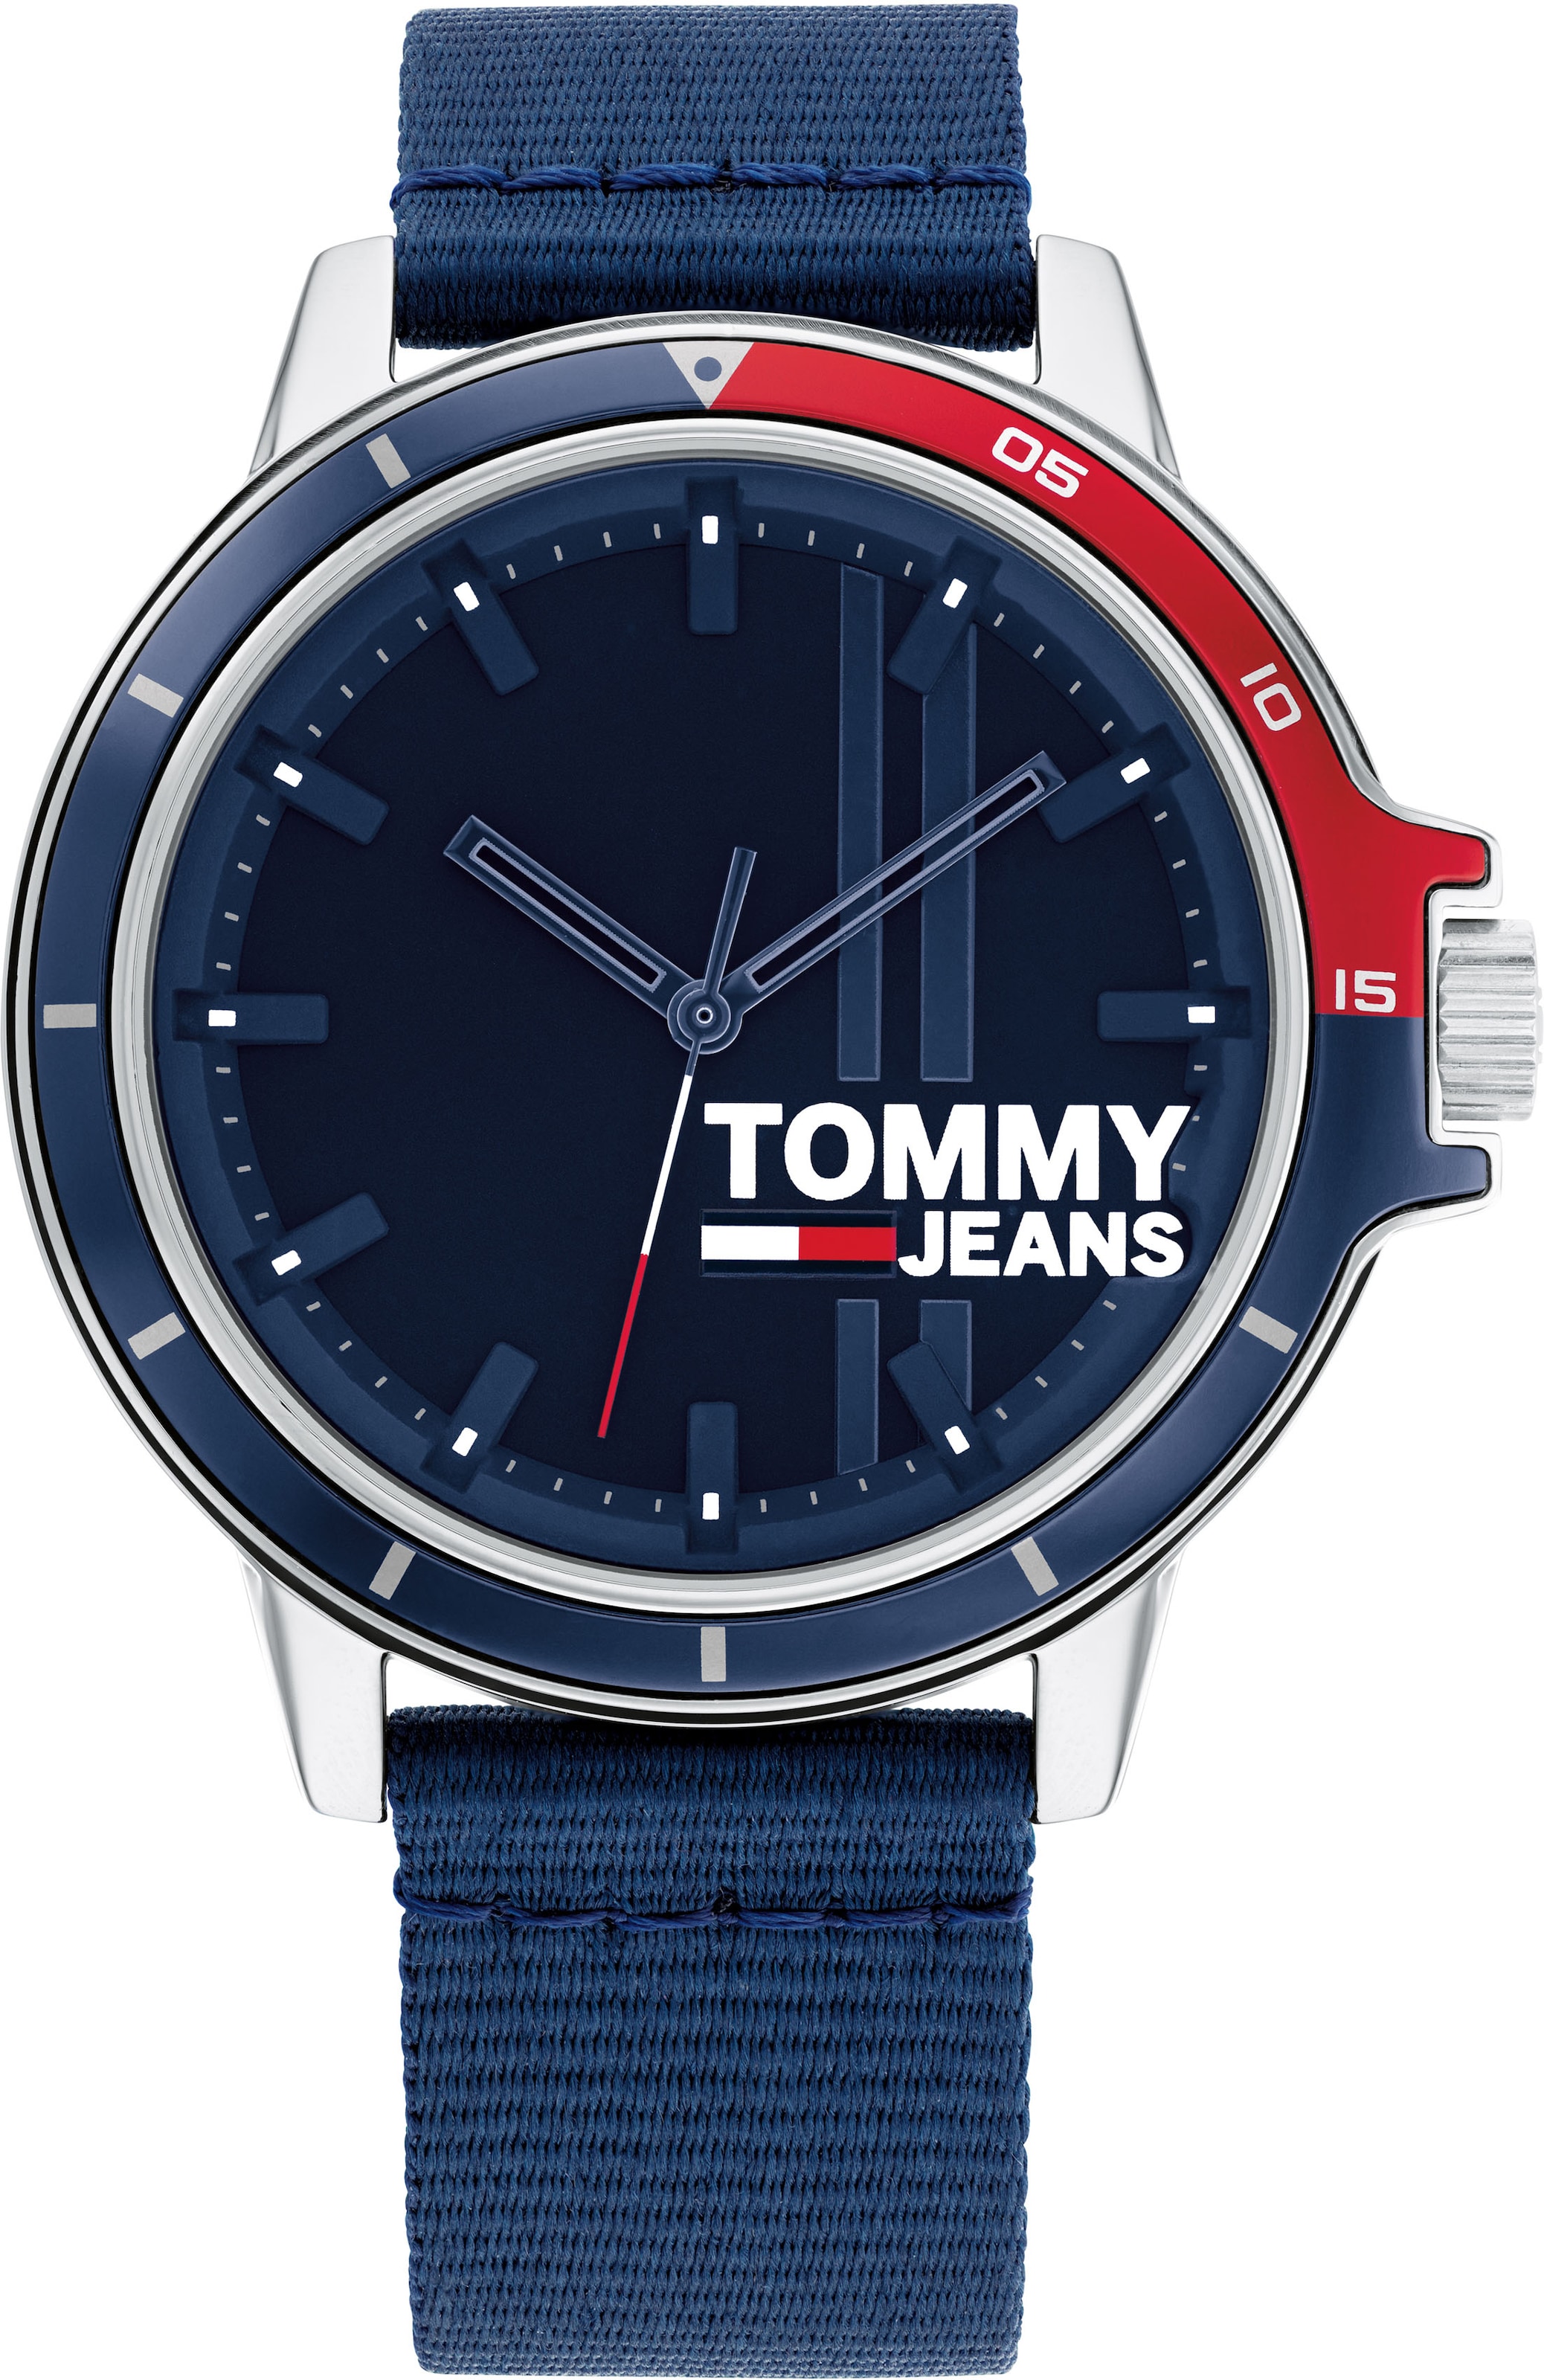 Männer Uhren Tommy Jeans Uhr in Blau - GN68679